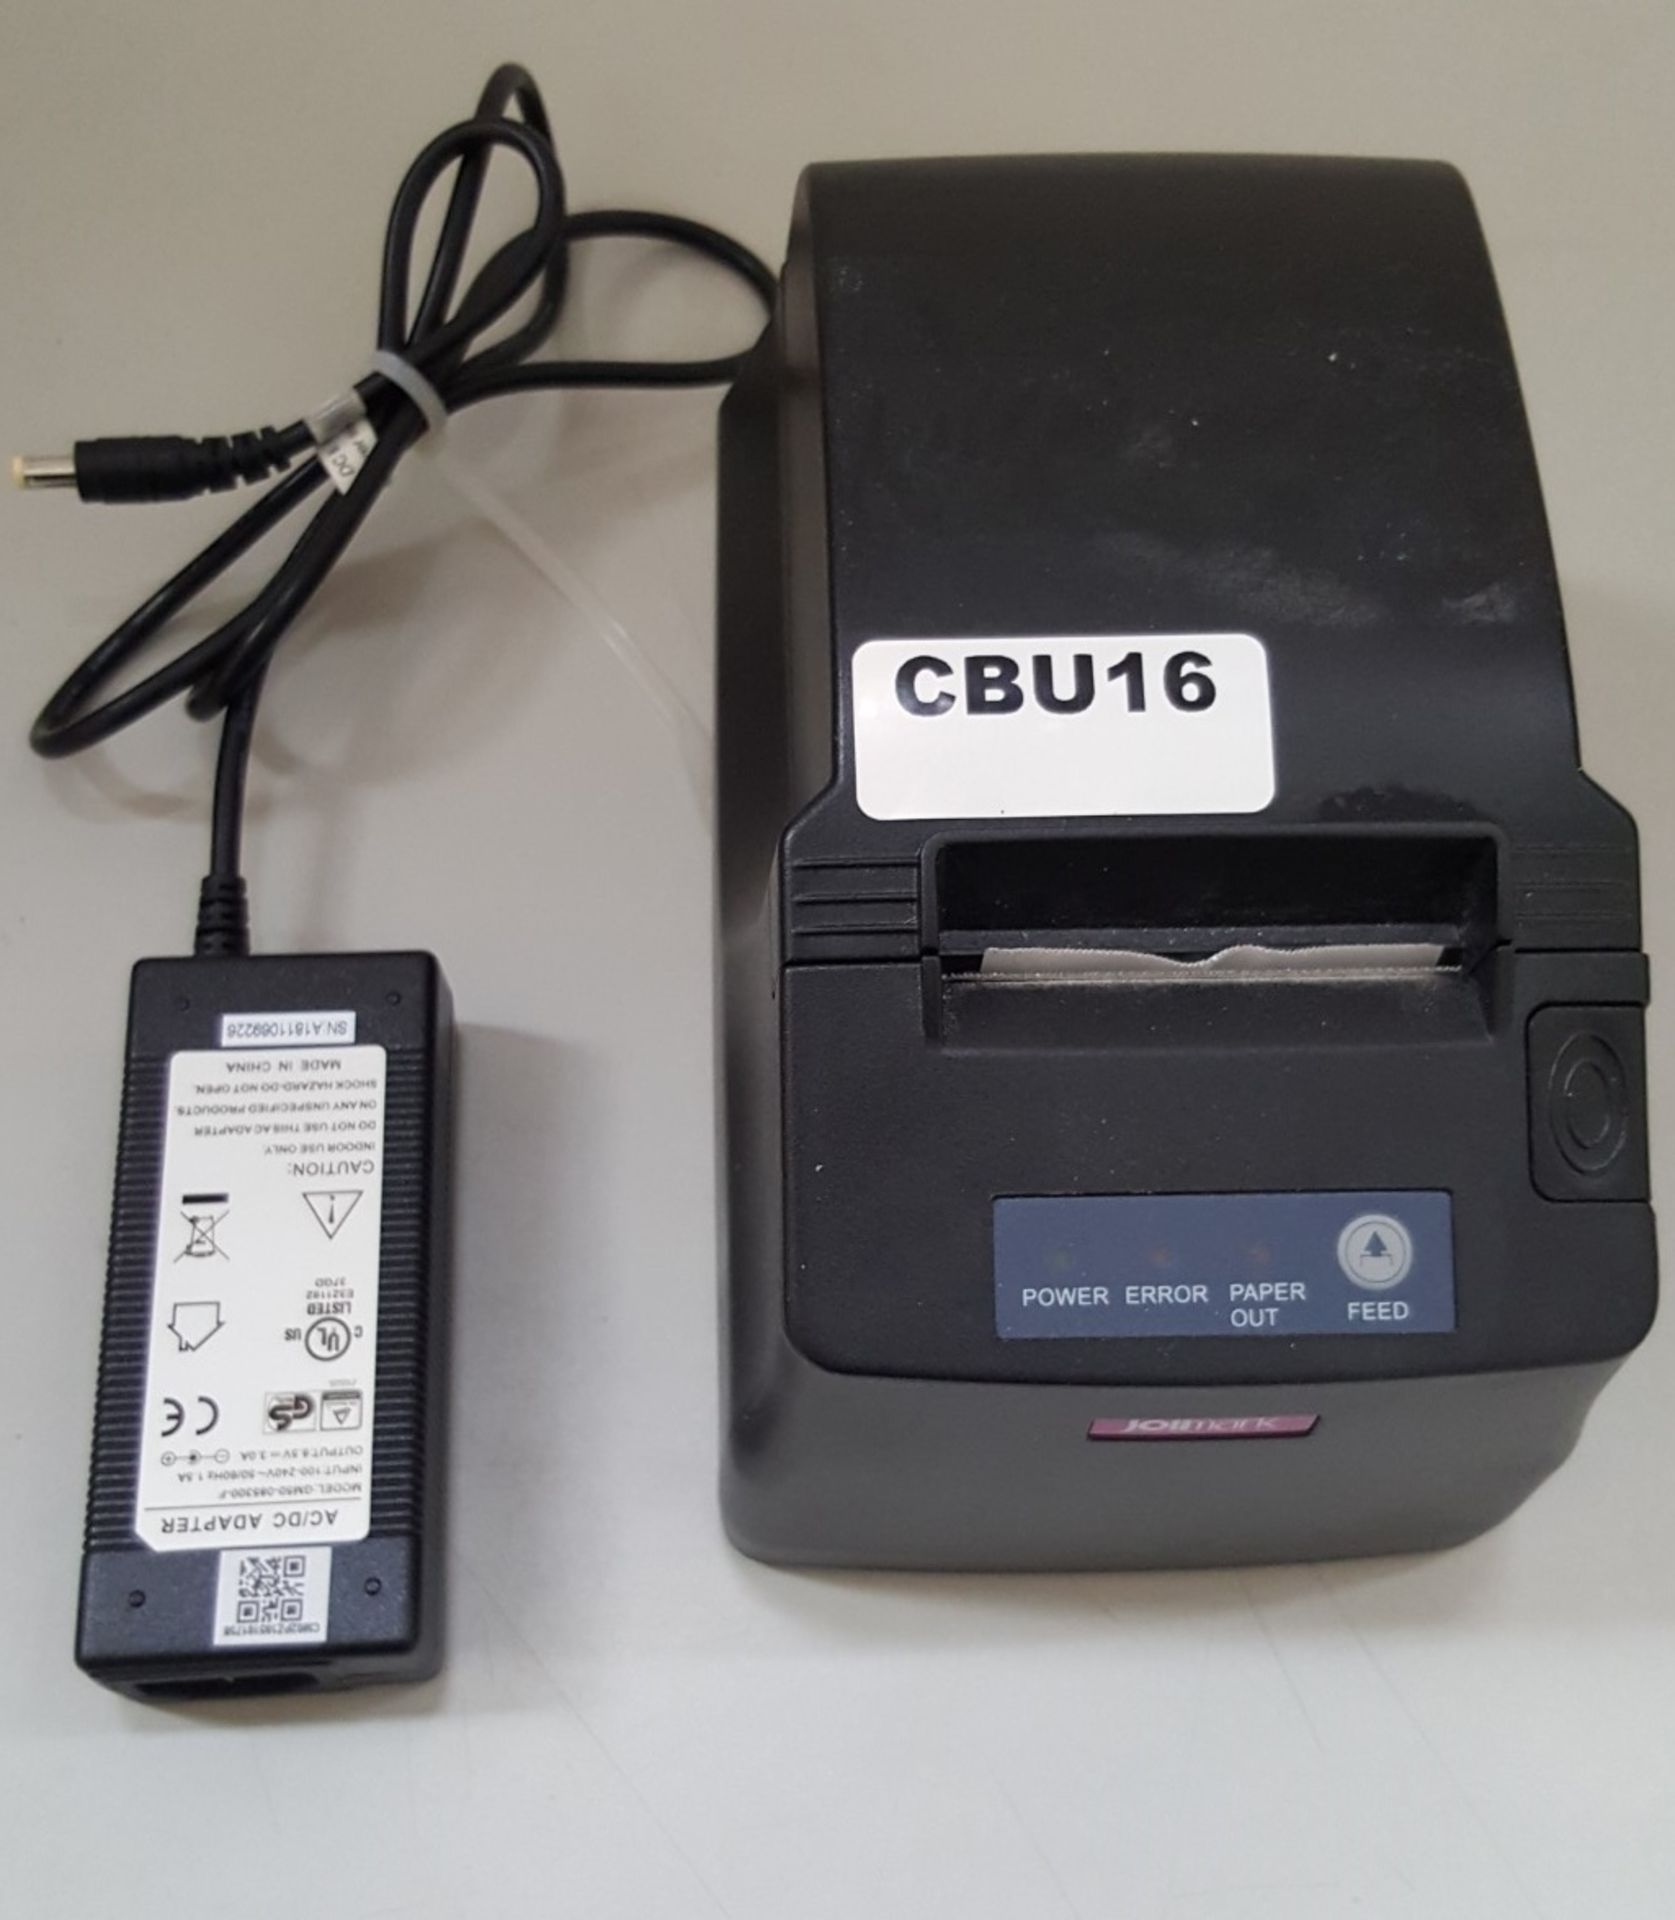 1 x Jolimark TP510UB High Speed Bluetooth Thermal Receipt Printer - Ref CBU16